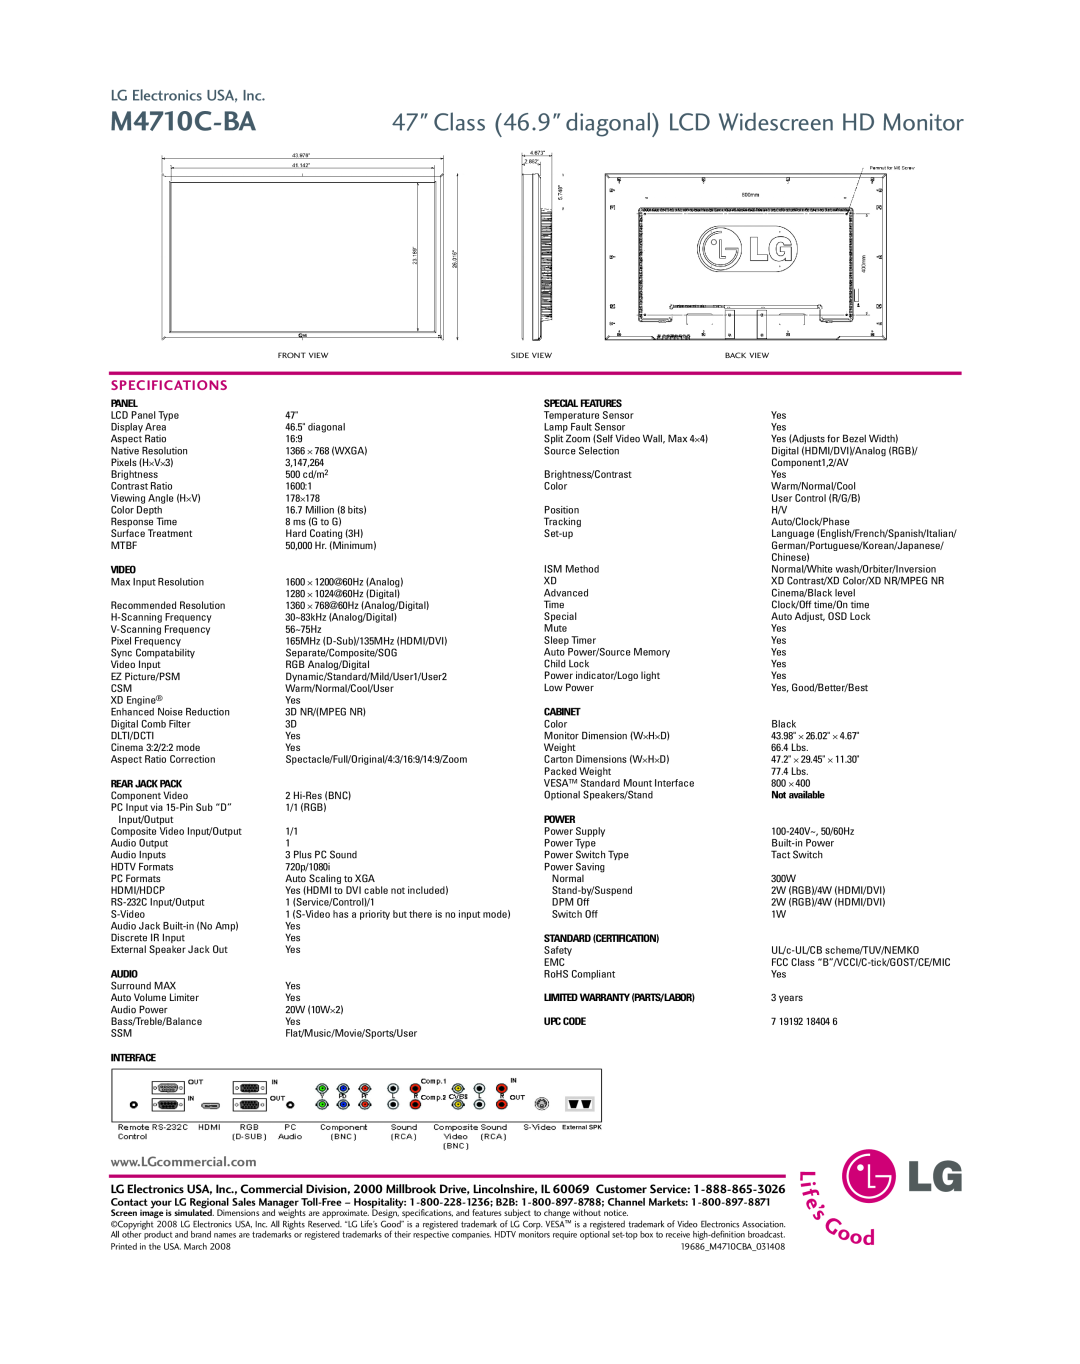 LG Electronics M4710C-BA warranty Class 46.9 diagonal LCD Widescreen HD Monitor, LG Electronics USA, Inc, Specifications 